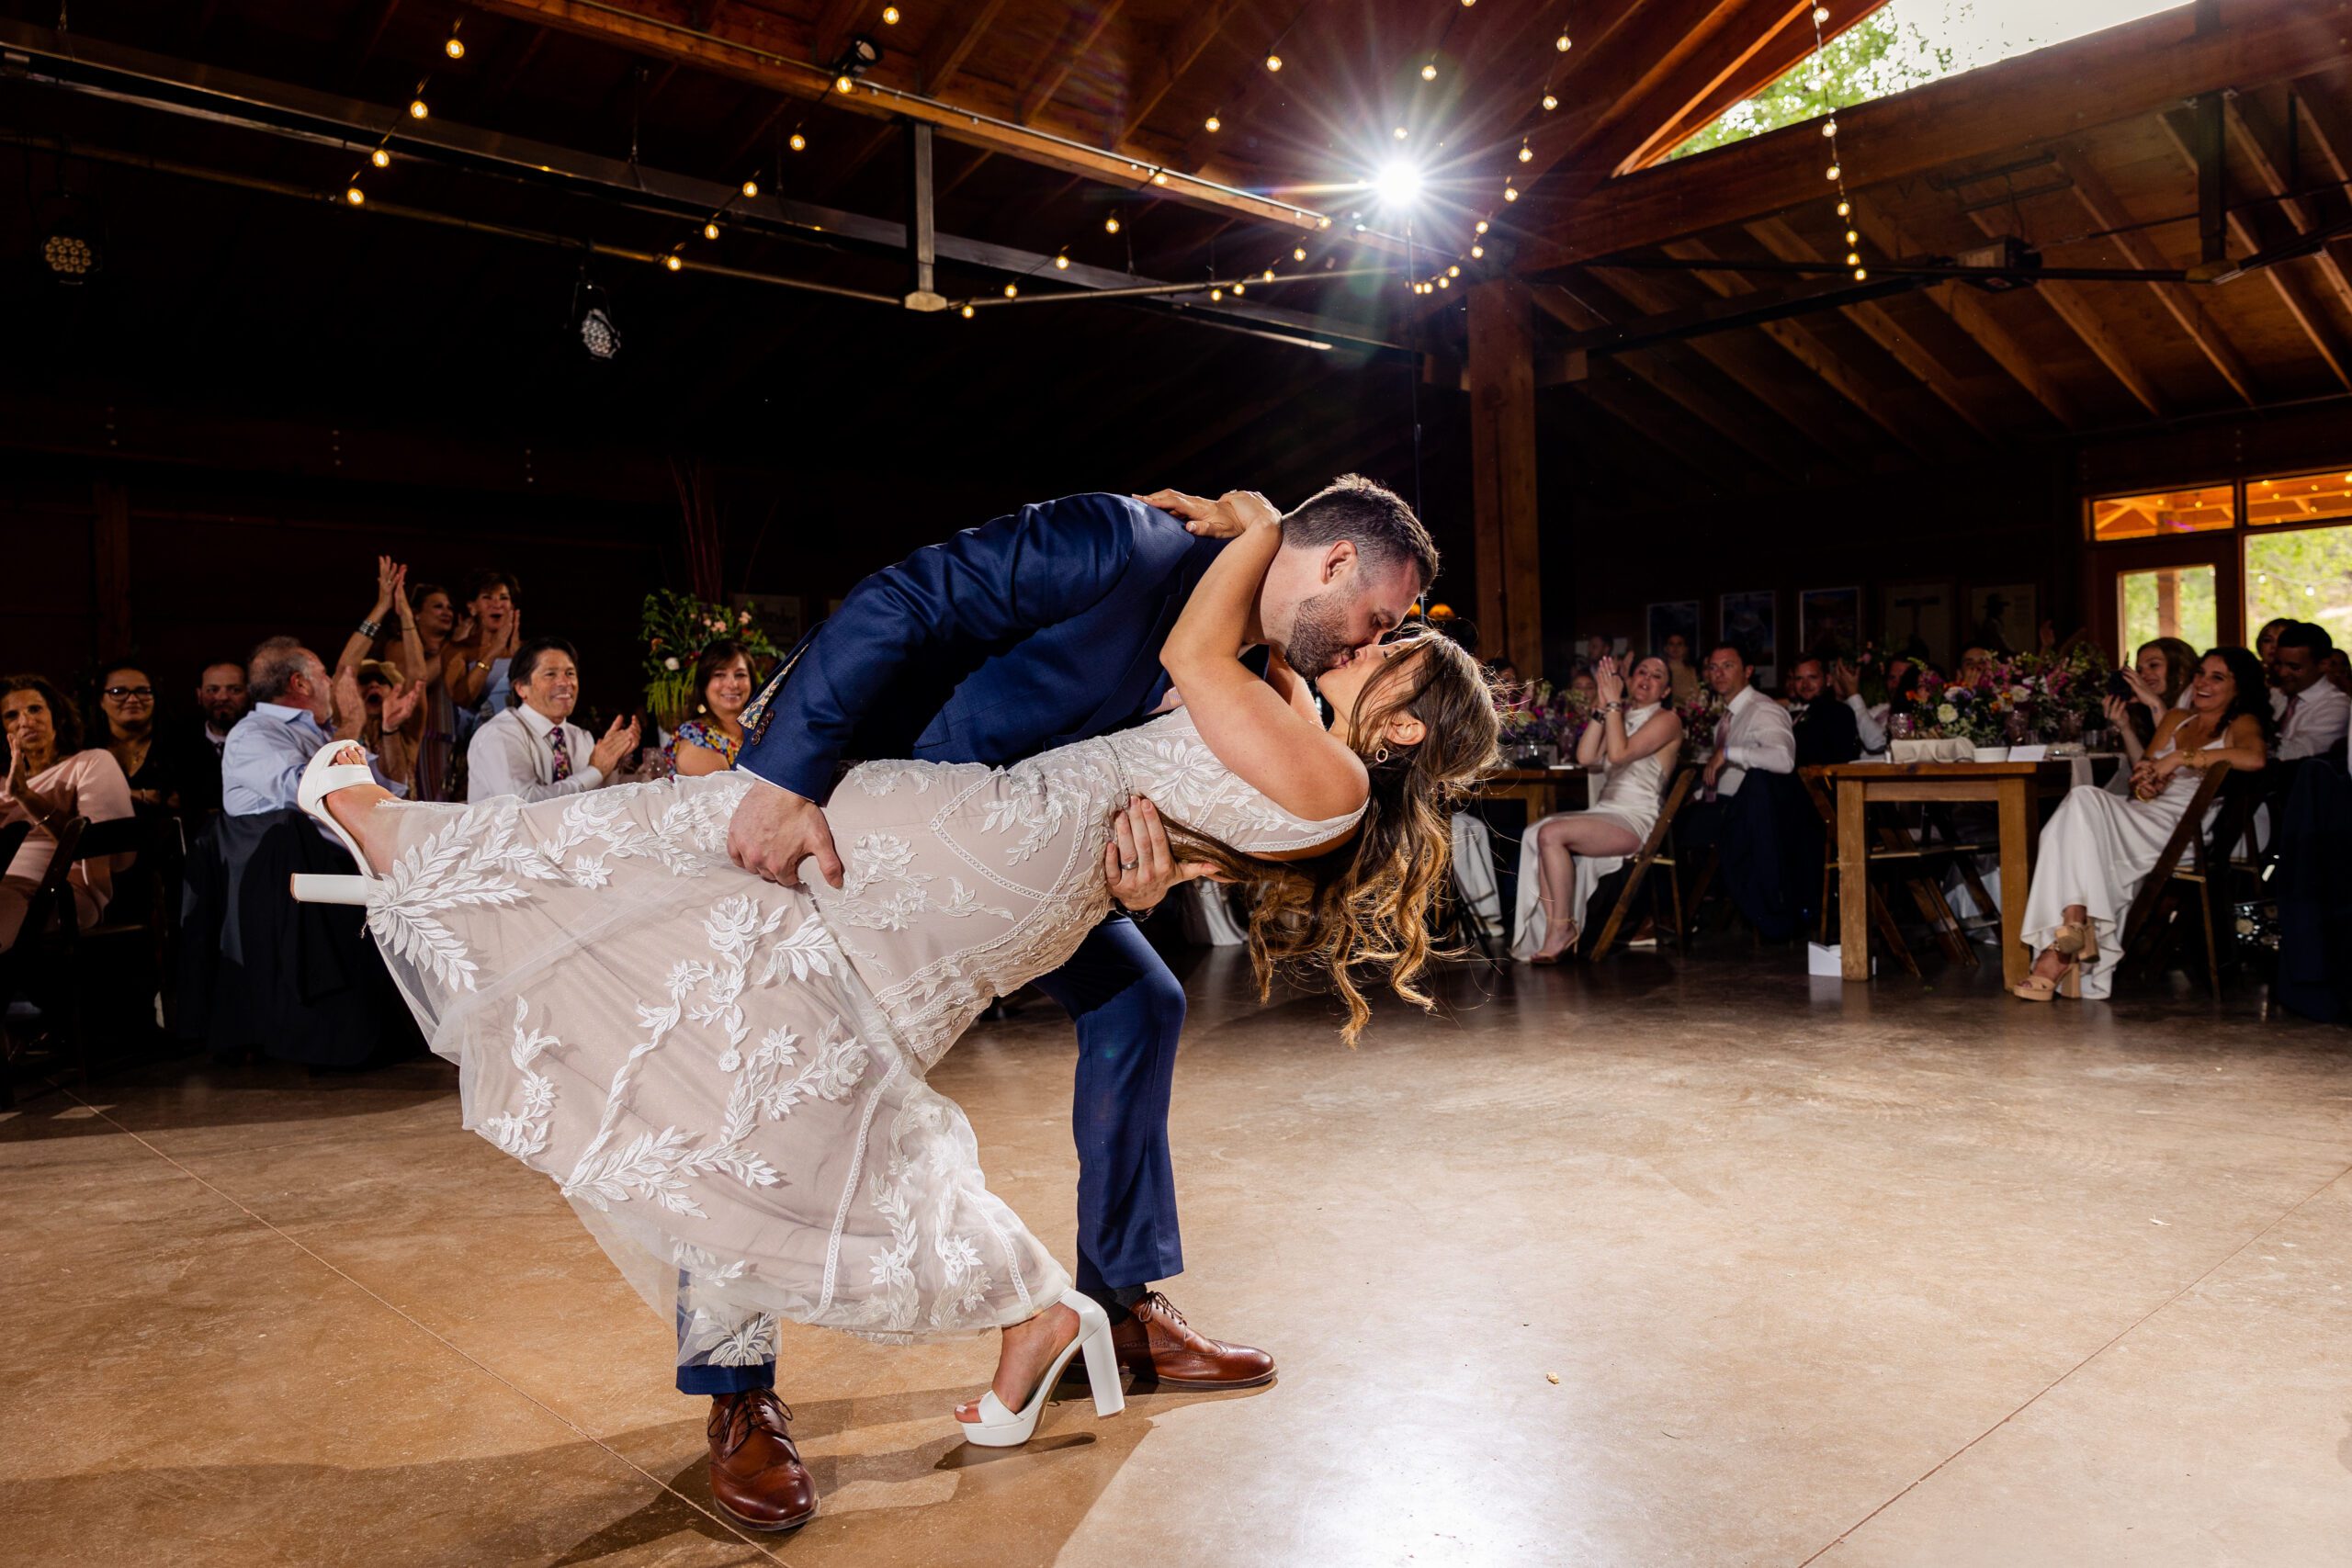 Bride and groom first dance, wedding photography, wedding inspiration, wedding shoes with chunky heel, Planet Bluegrass, Colorado wedding photographer